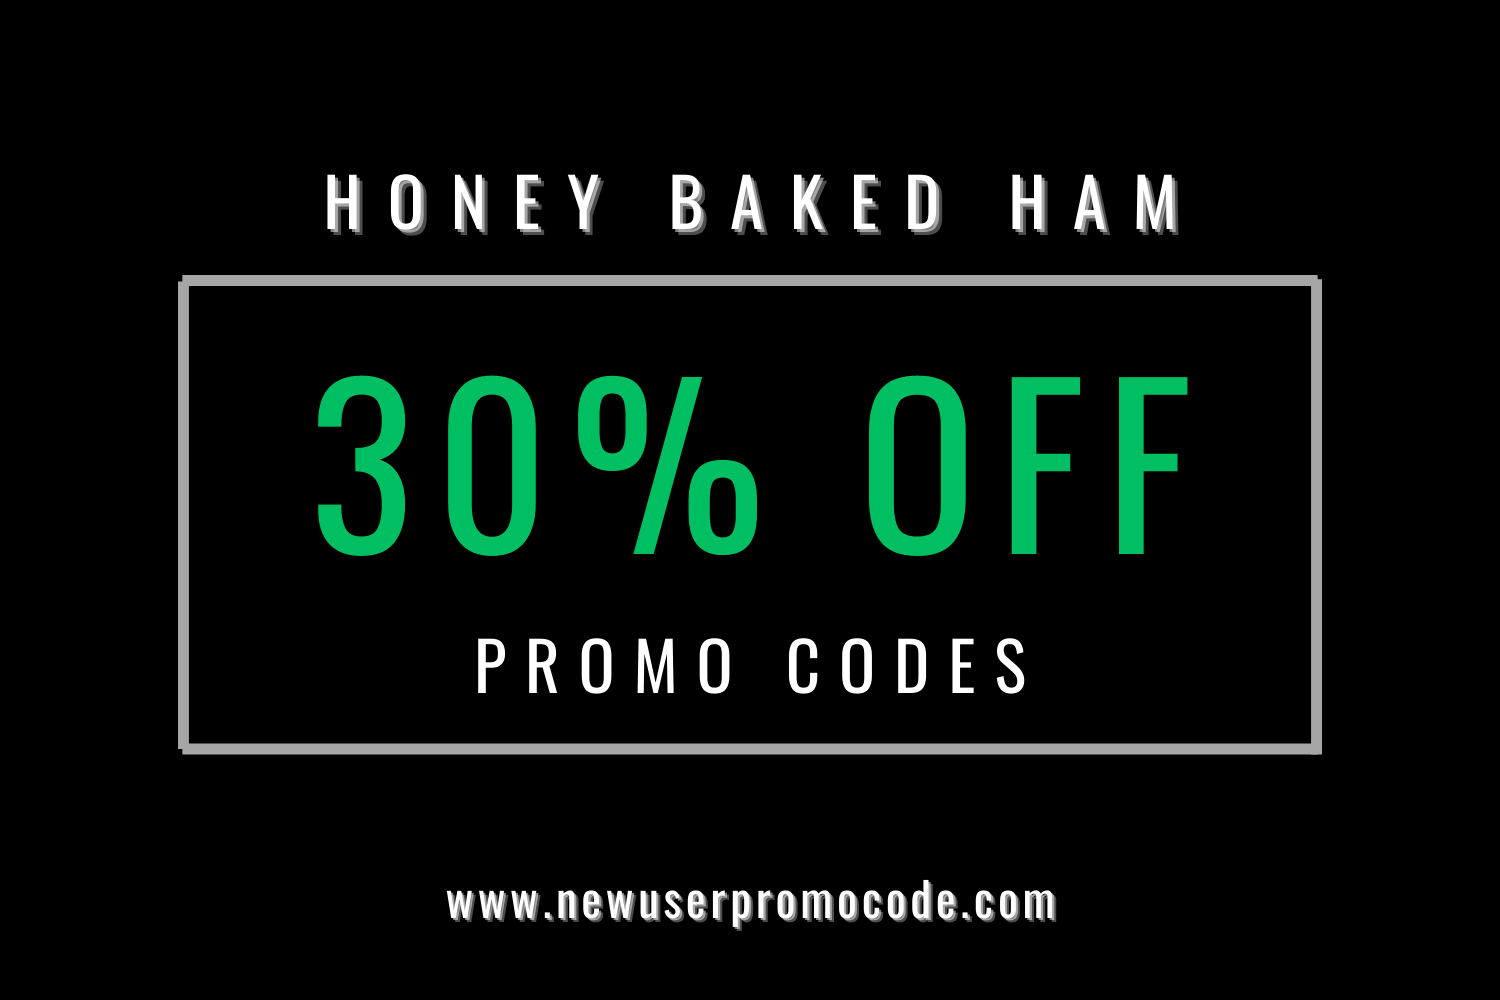 Honey Baked Ham Promo Code